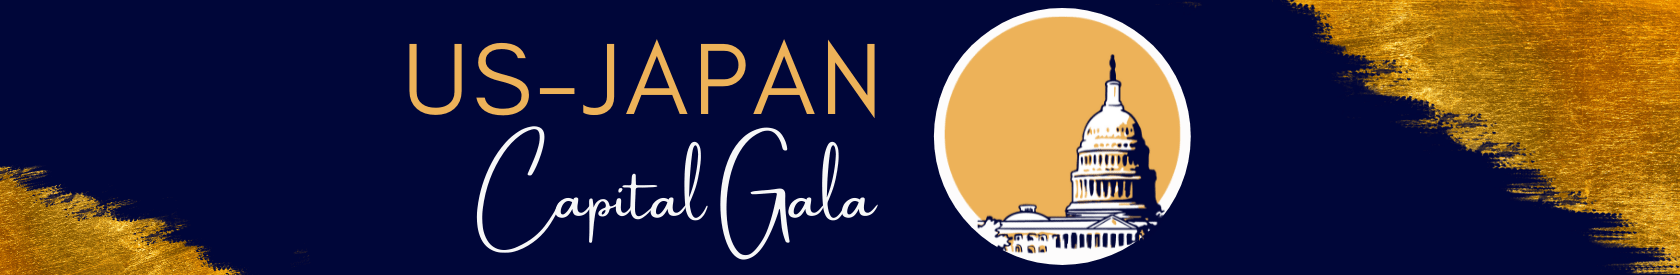 The 35th Annual US-Japan Capital Gala